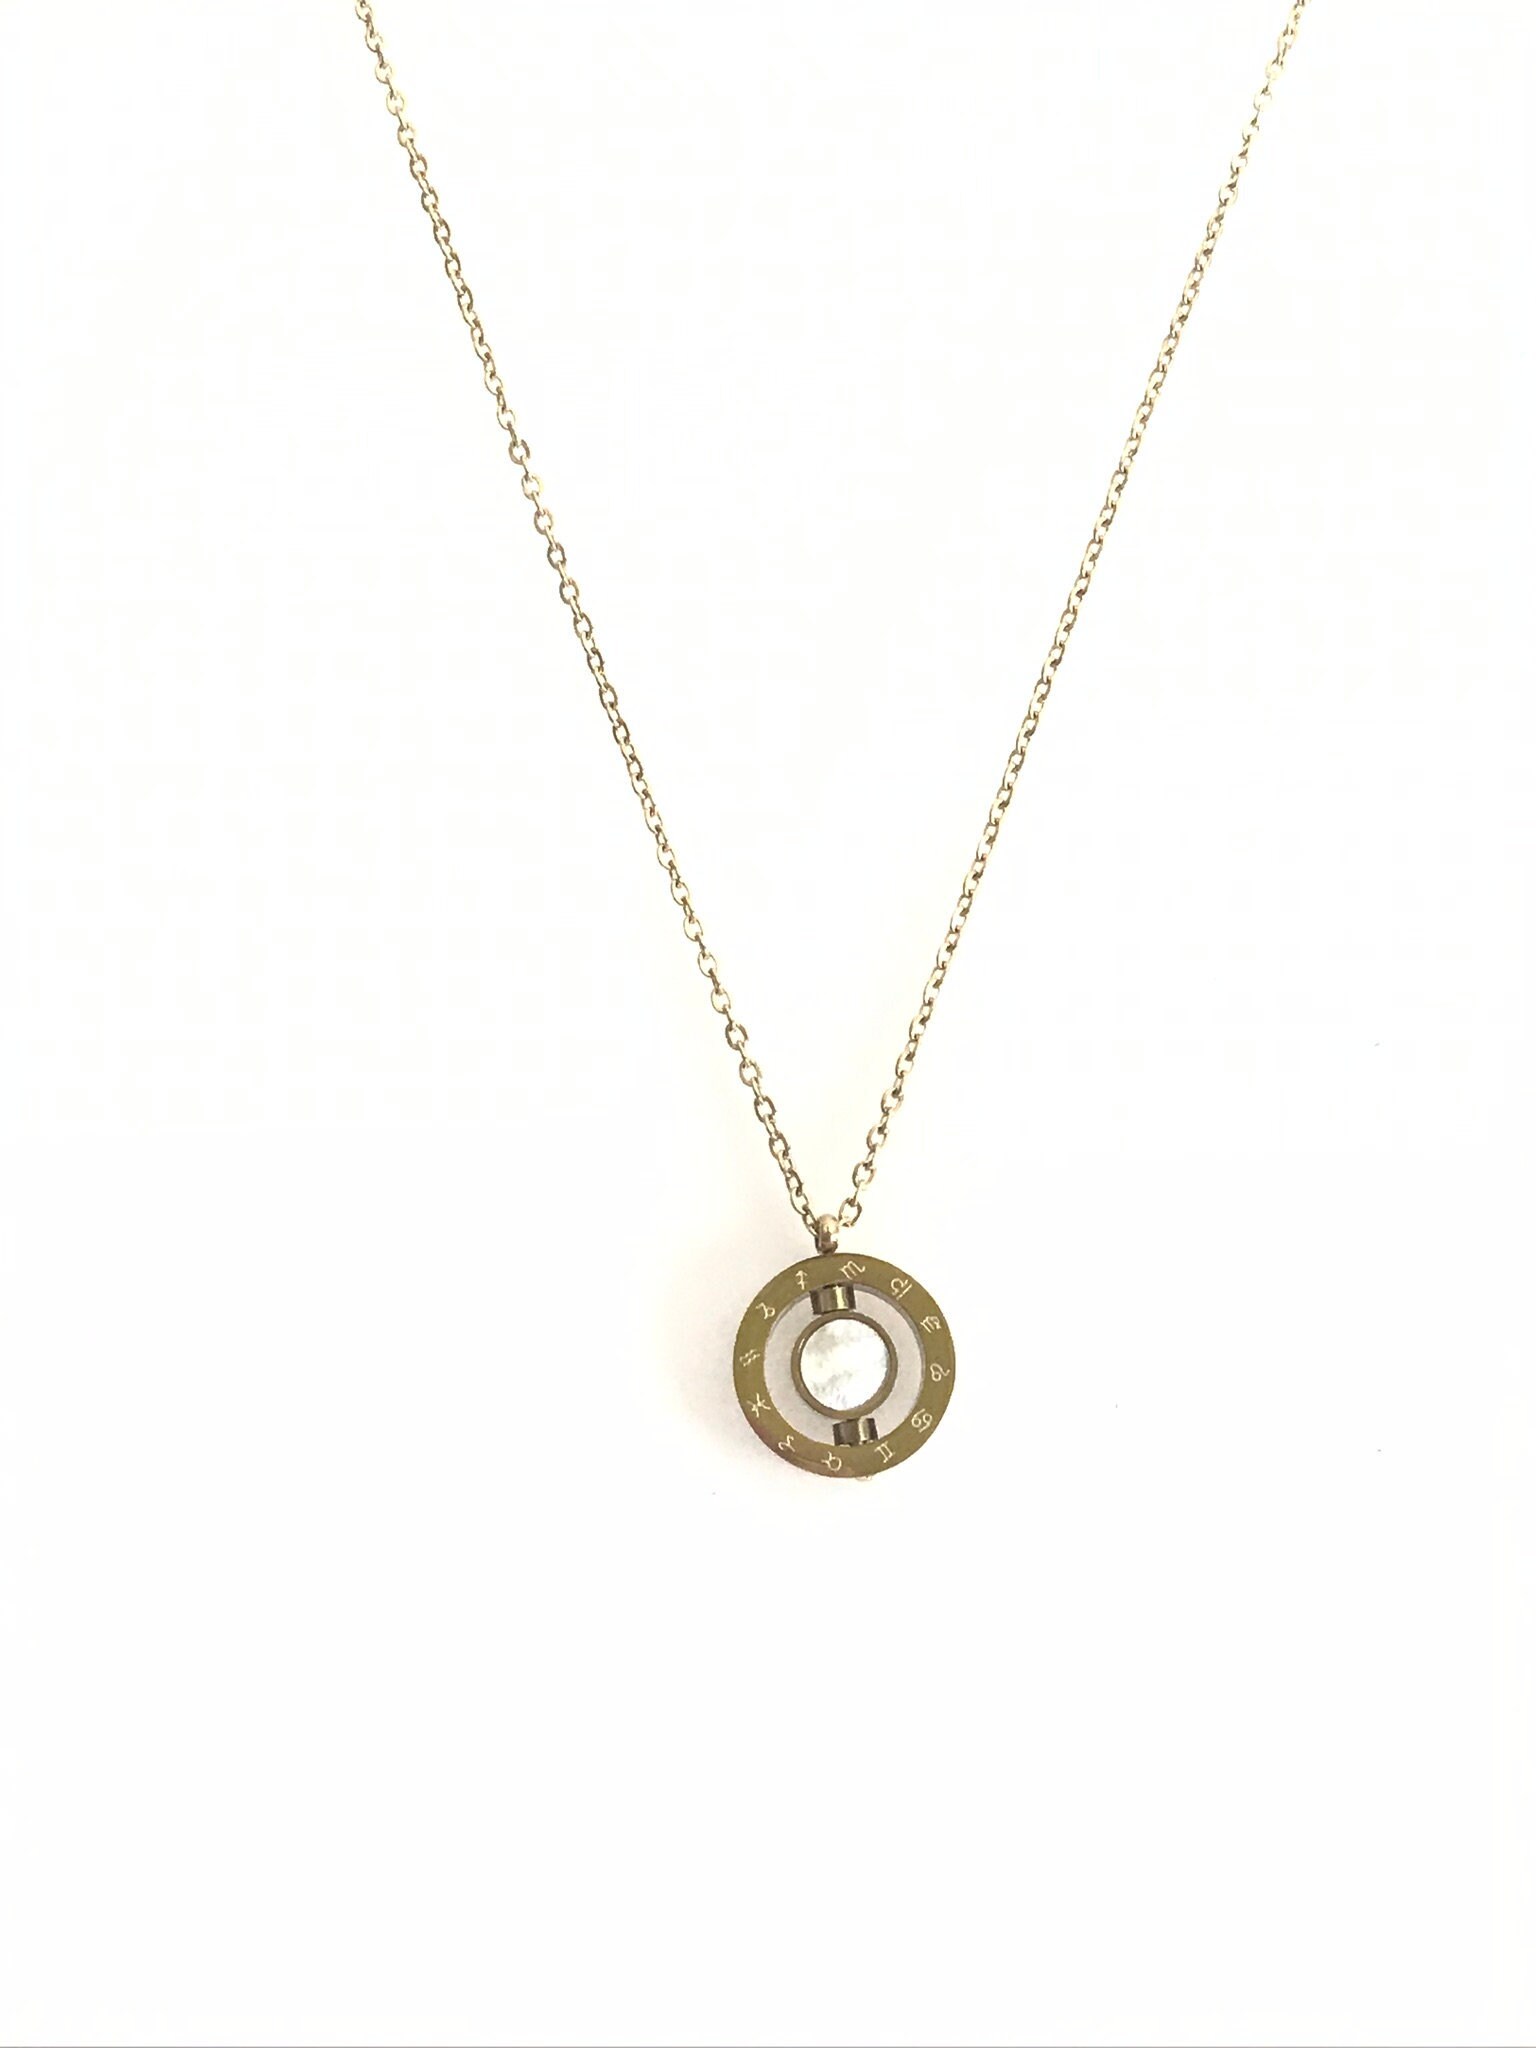 Zodiac signs necklace astrology jewelry birthday necklace | Etsy